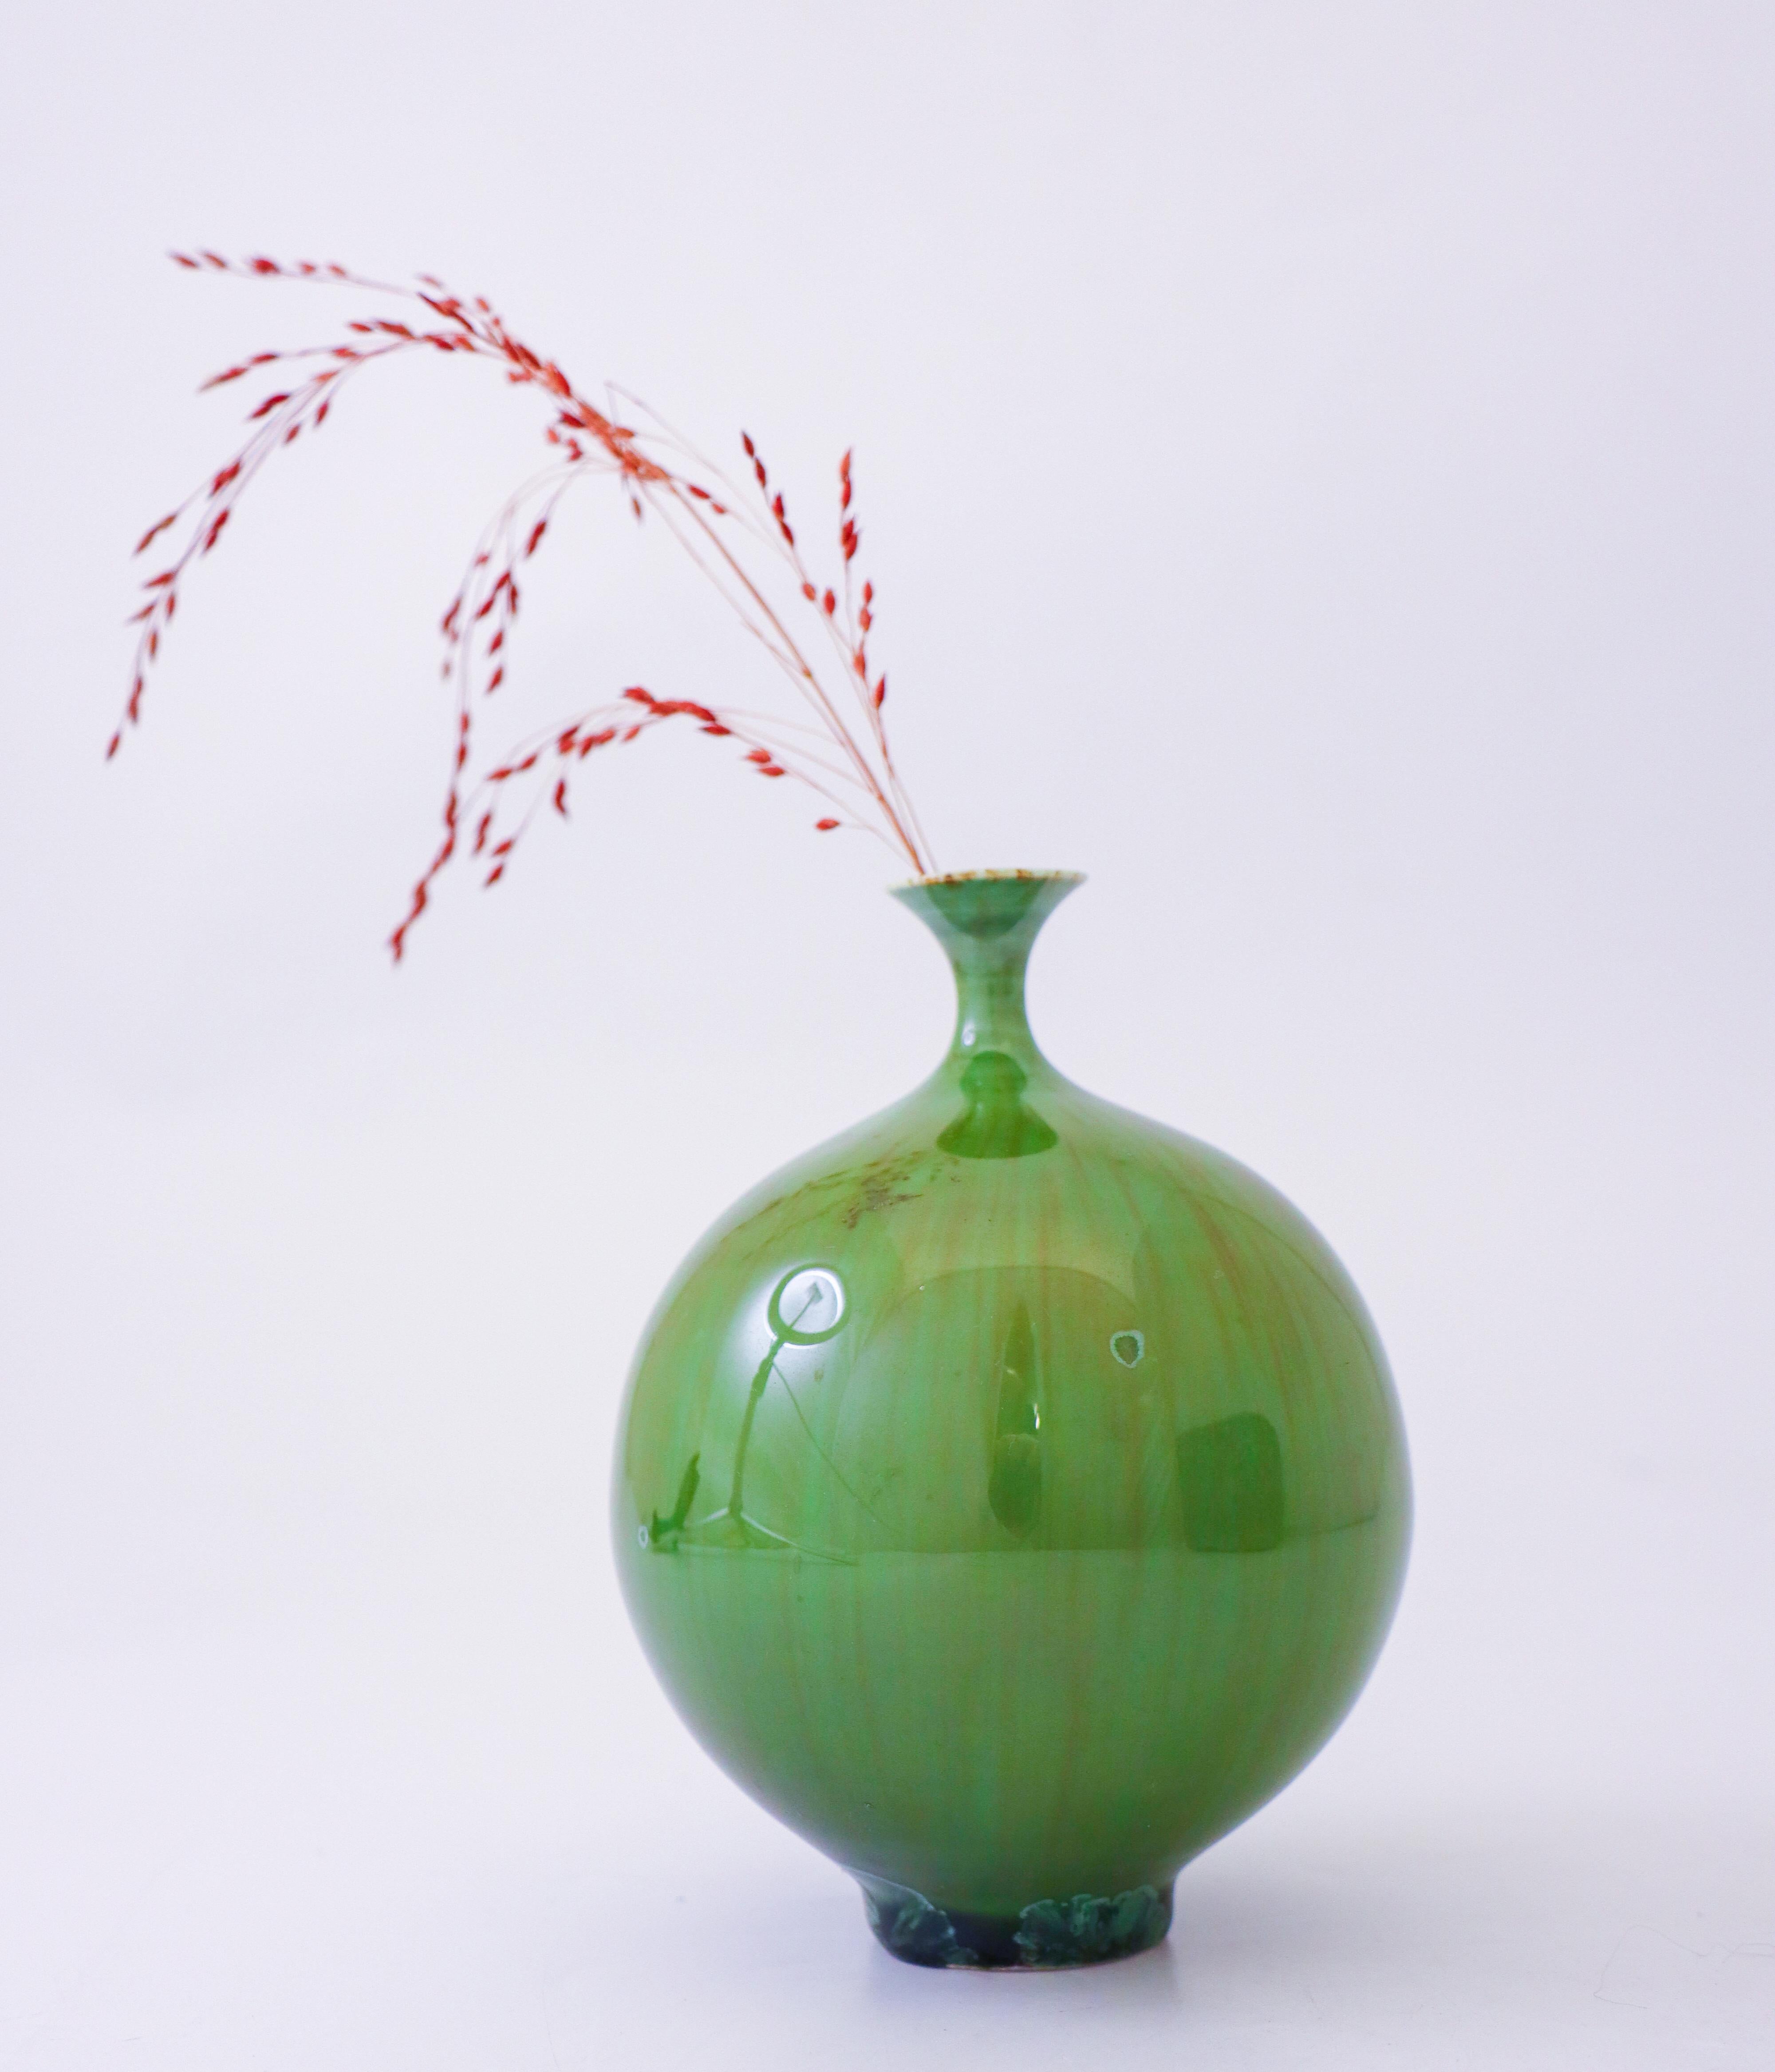 Glazed Isak Isaksson Green Ceramic Vase Crystalline Glaze - Contemporary Artist For Sale